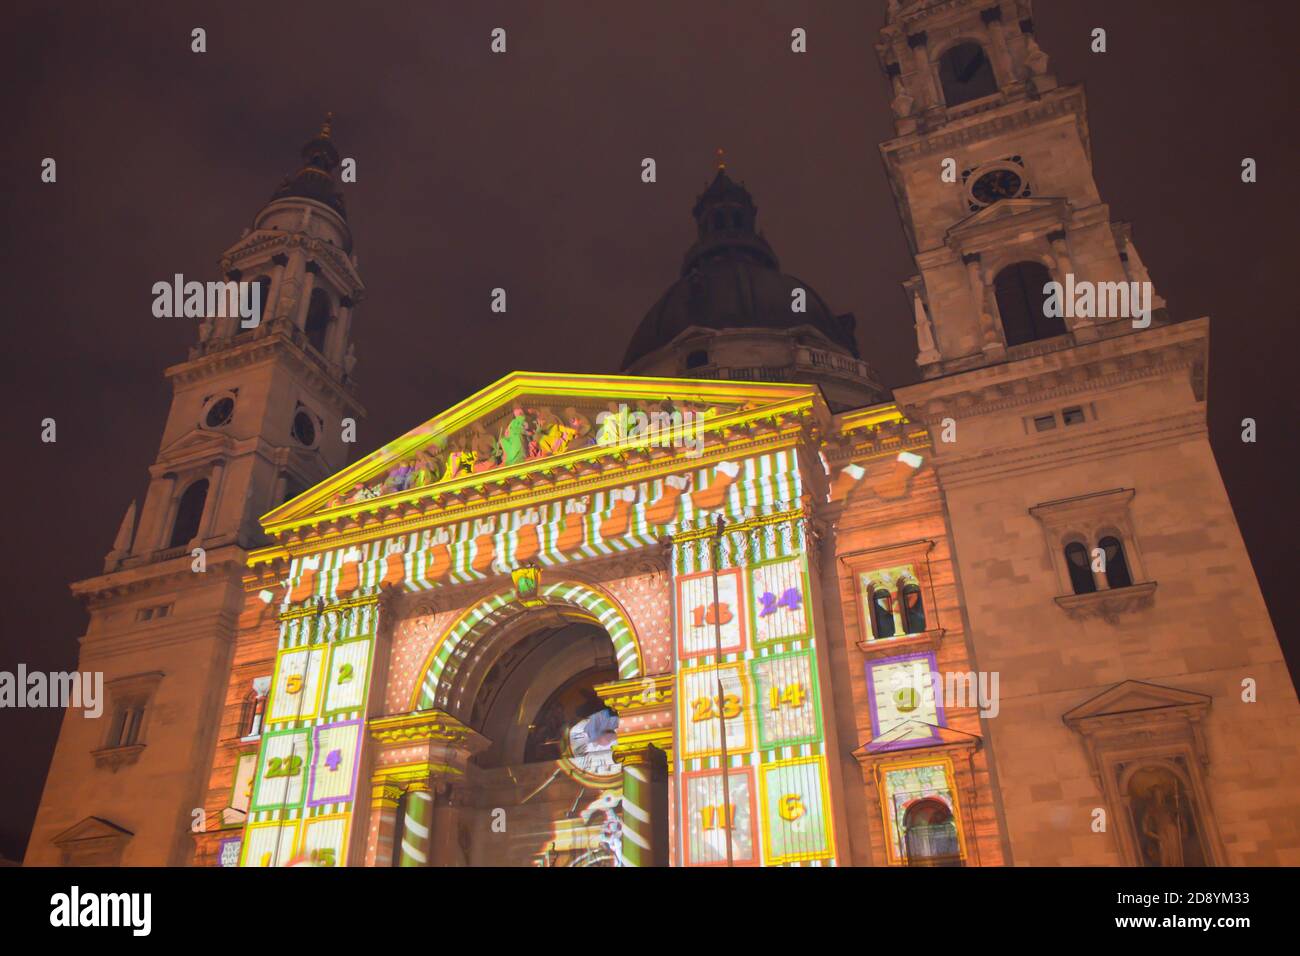 BUDAPEST, HUNGARY - JANUARY 1, 2018: Christmas light show on St. Stephen's Basilica building in Budapest on January 1, 2018. Stock Photo